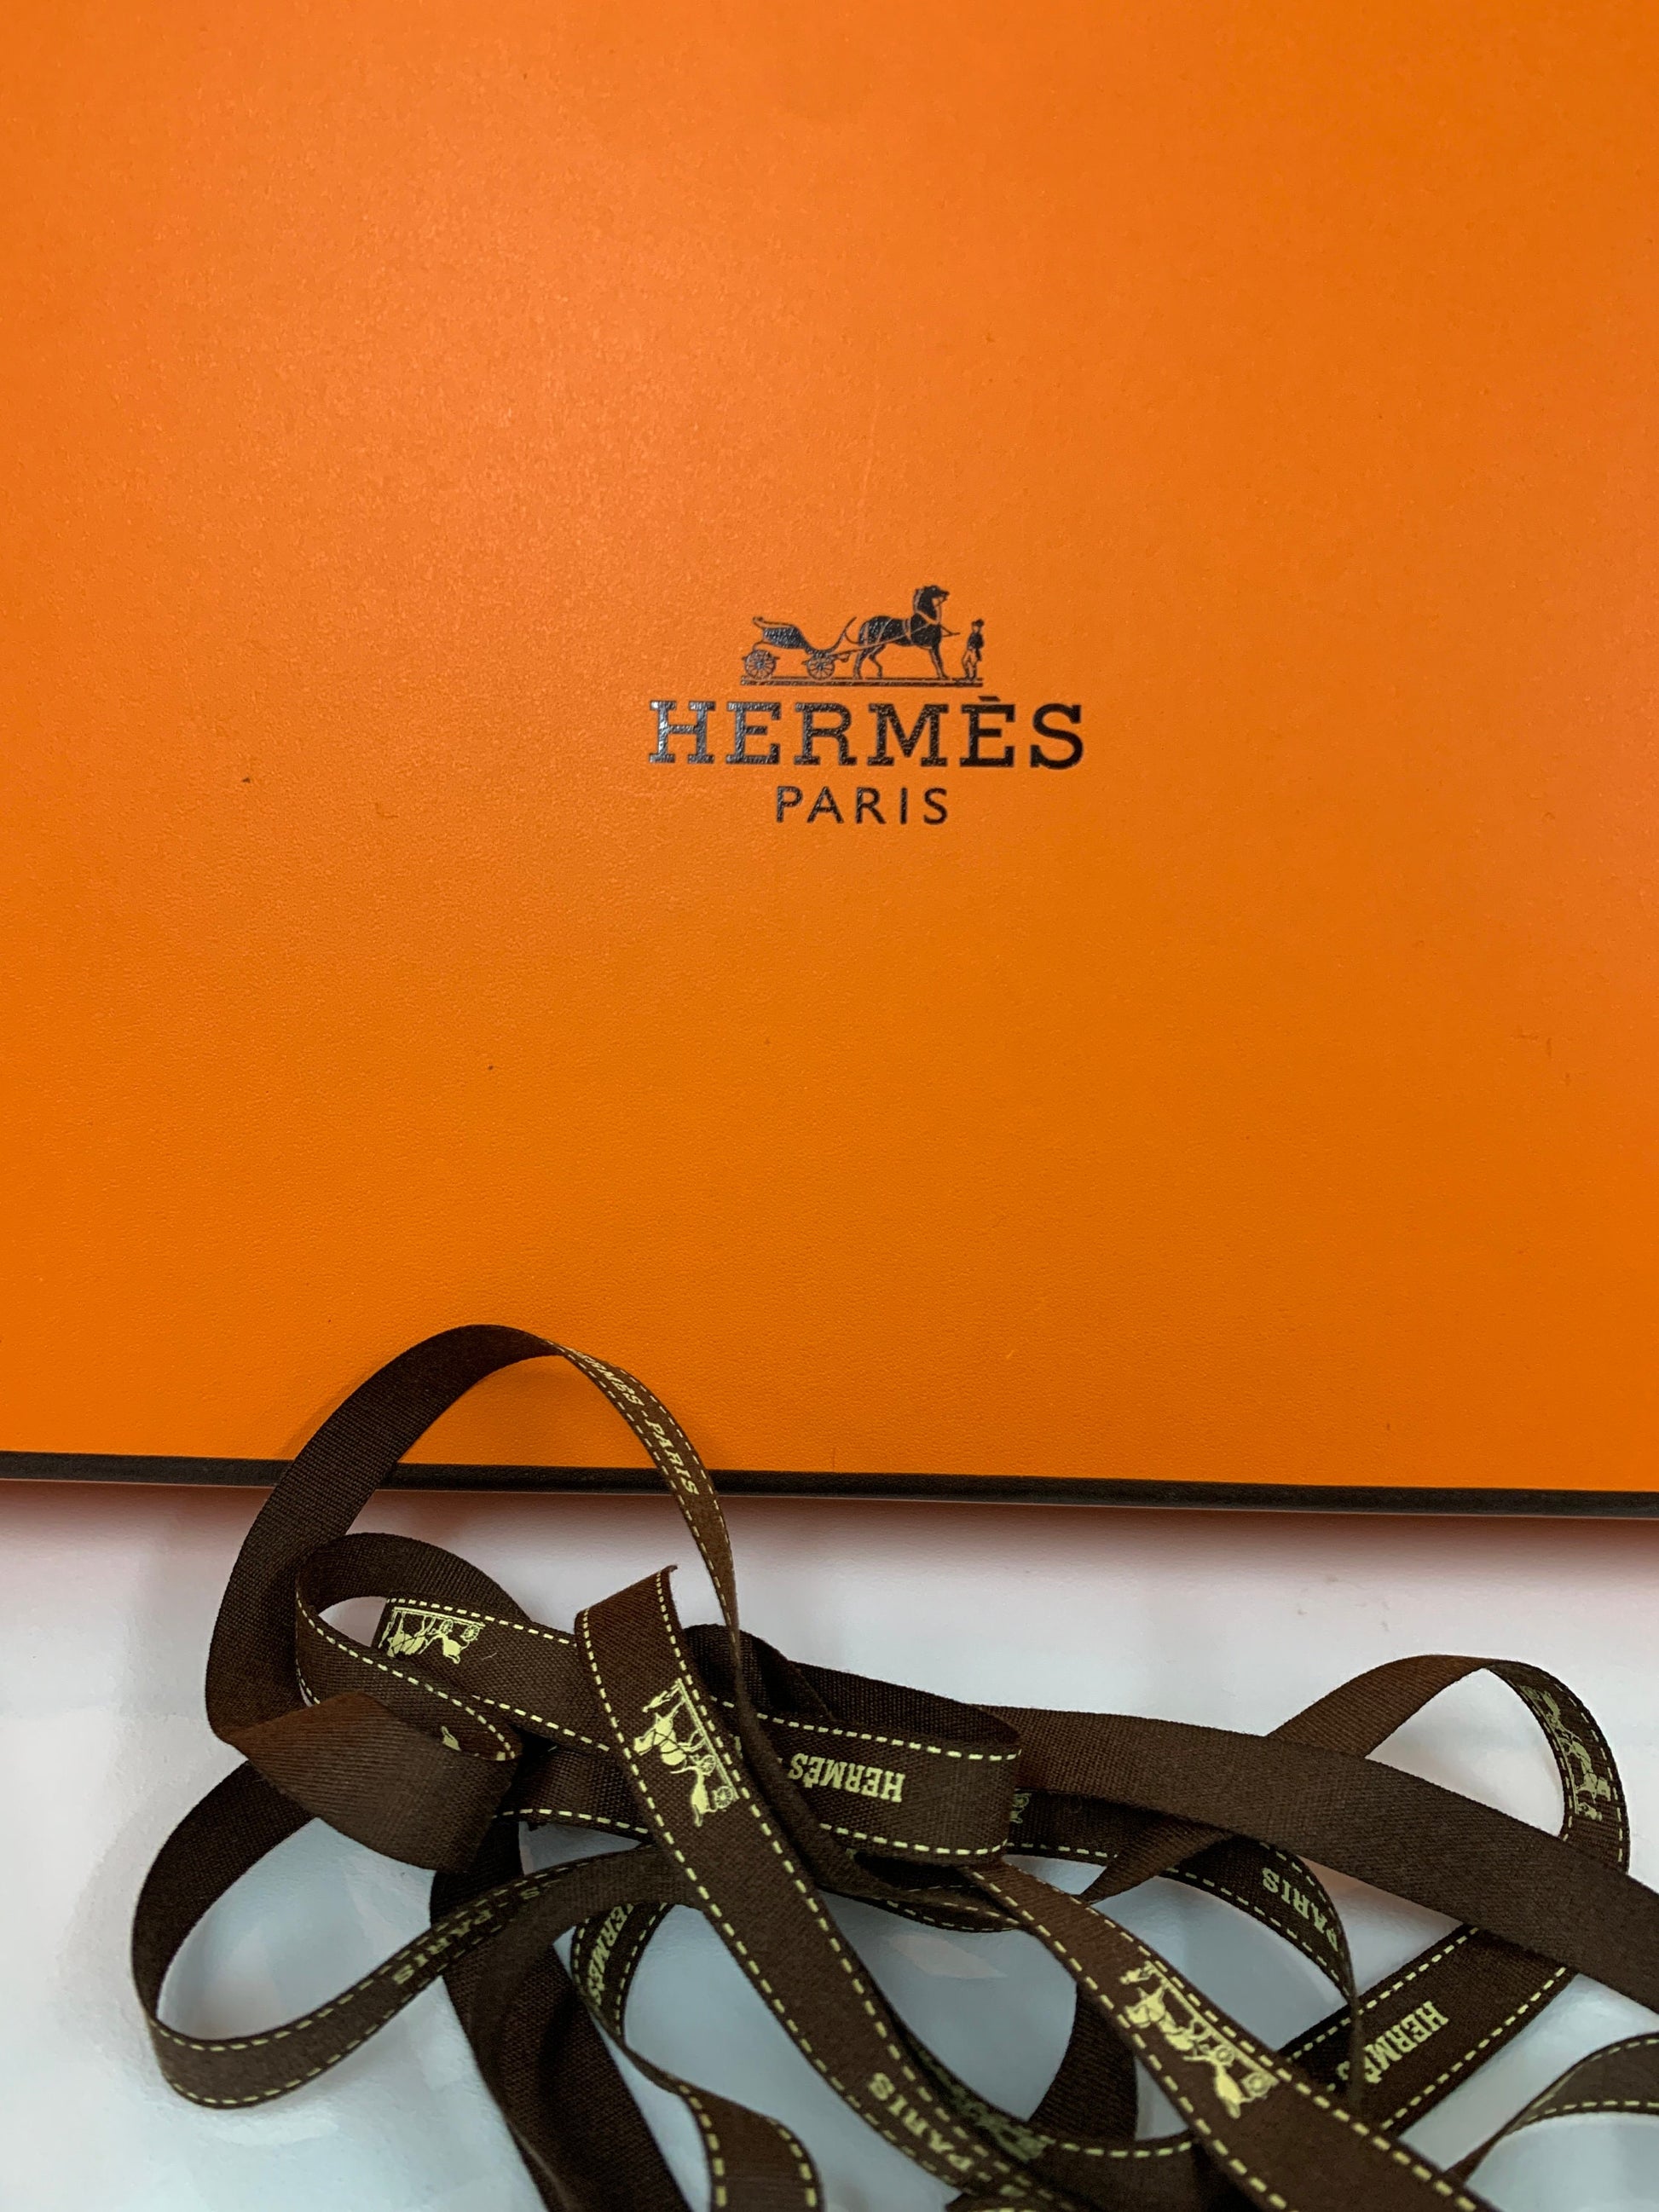 Hermes Paris Gift Box with paper bag ribbon 33W x 22H x 4 D – Trendy Ground